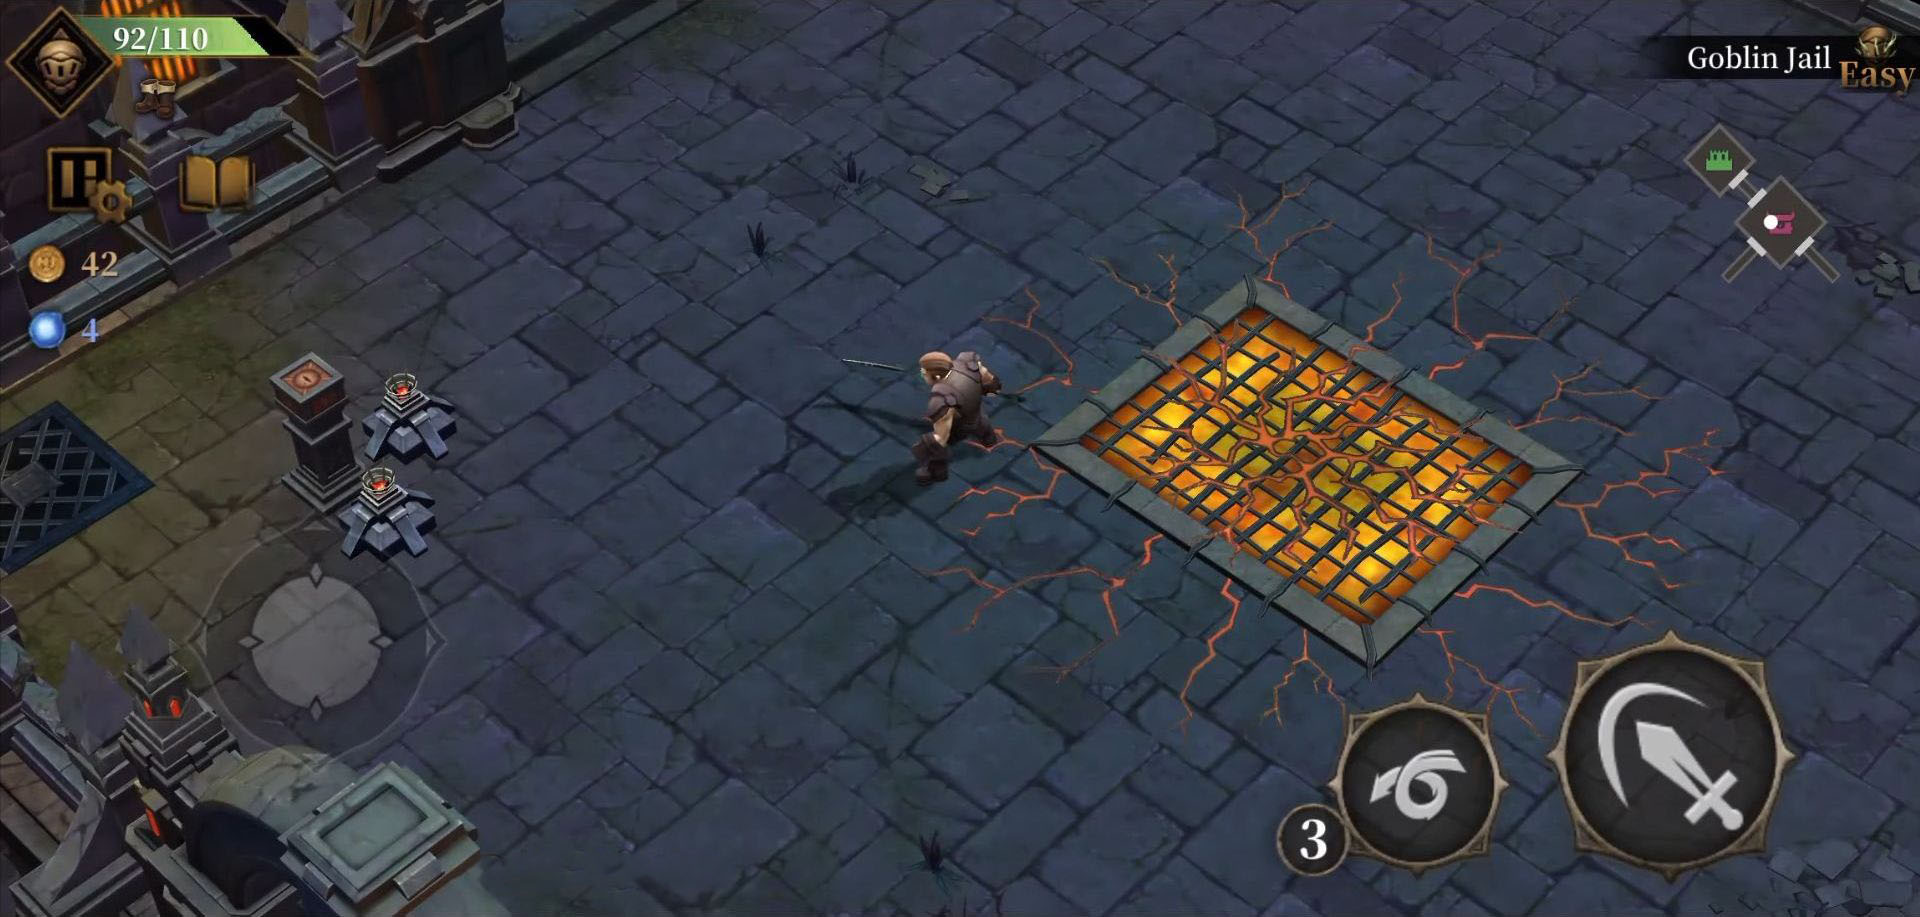 Dark Lord - Android game screenshots.